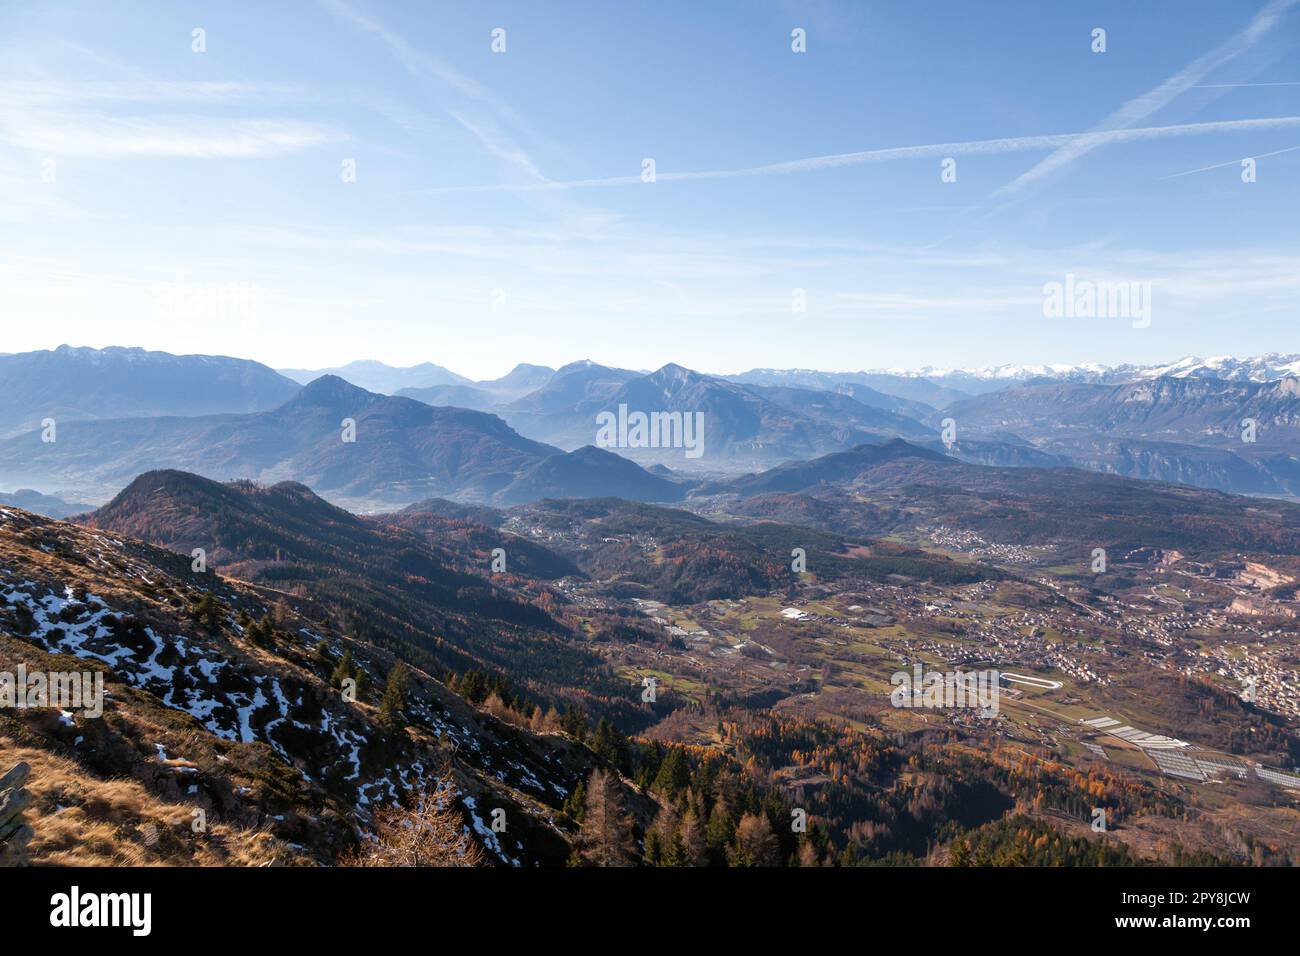 Landscape from Costalta mount top. Italian Alps panorama Stock Photo